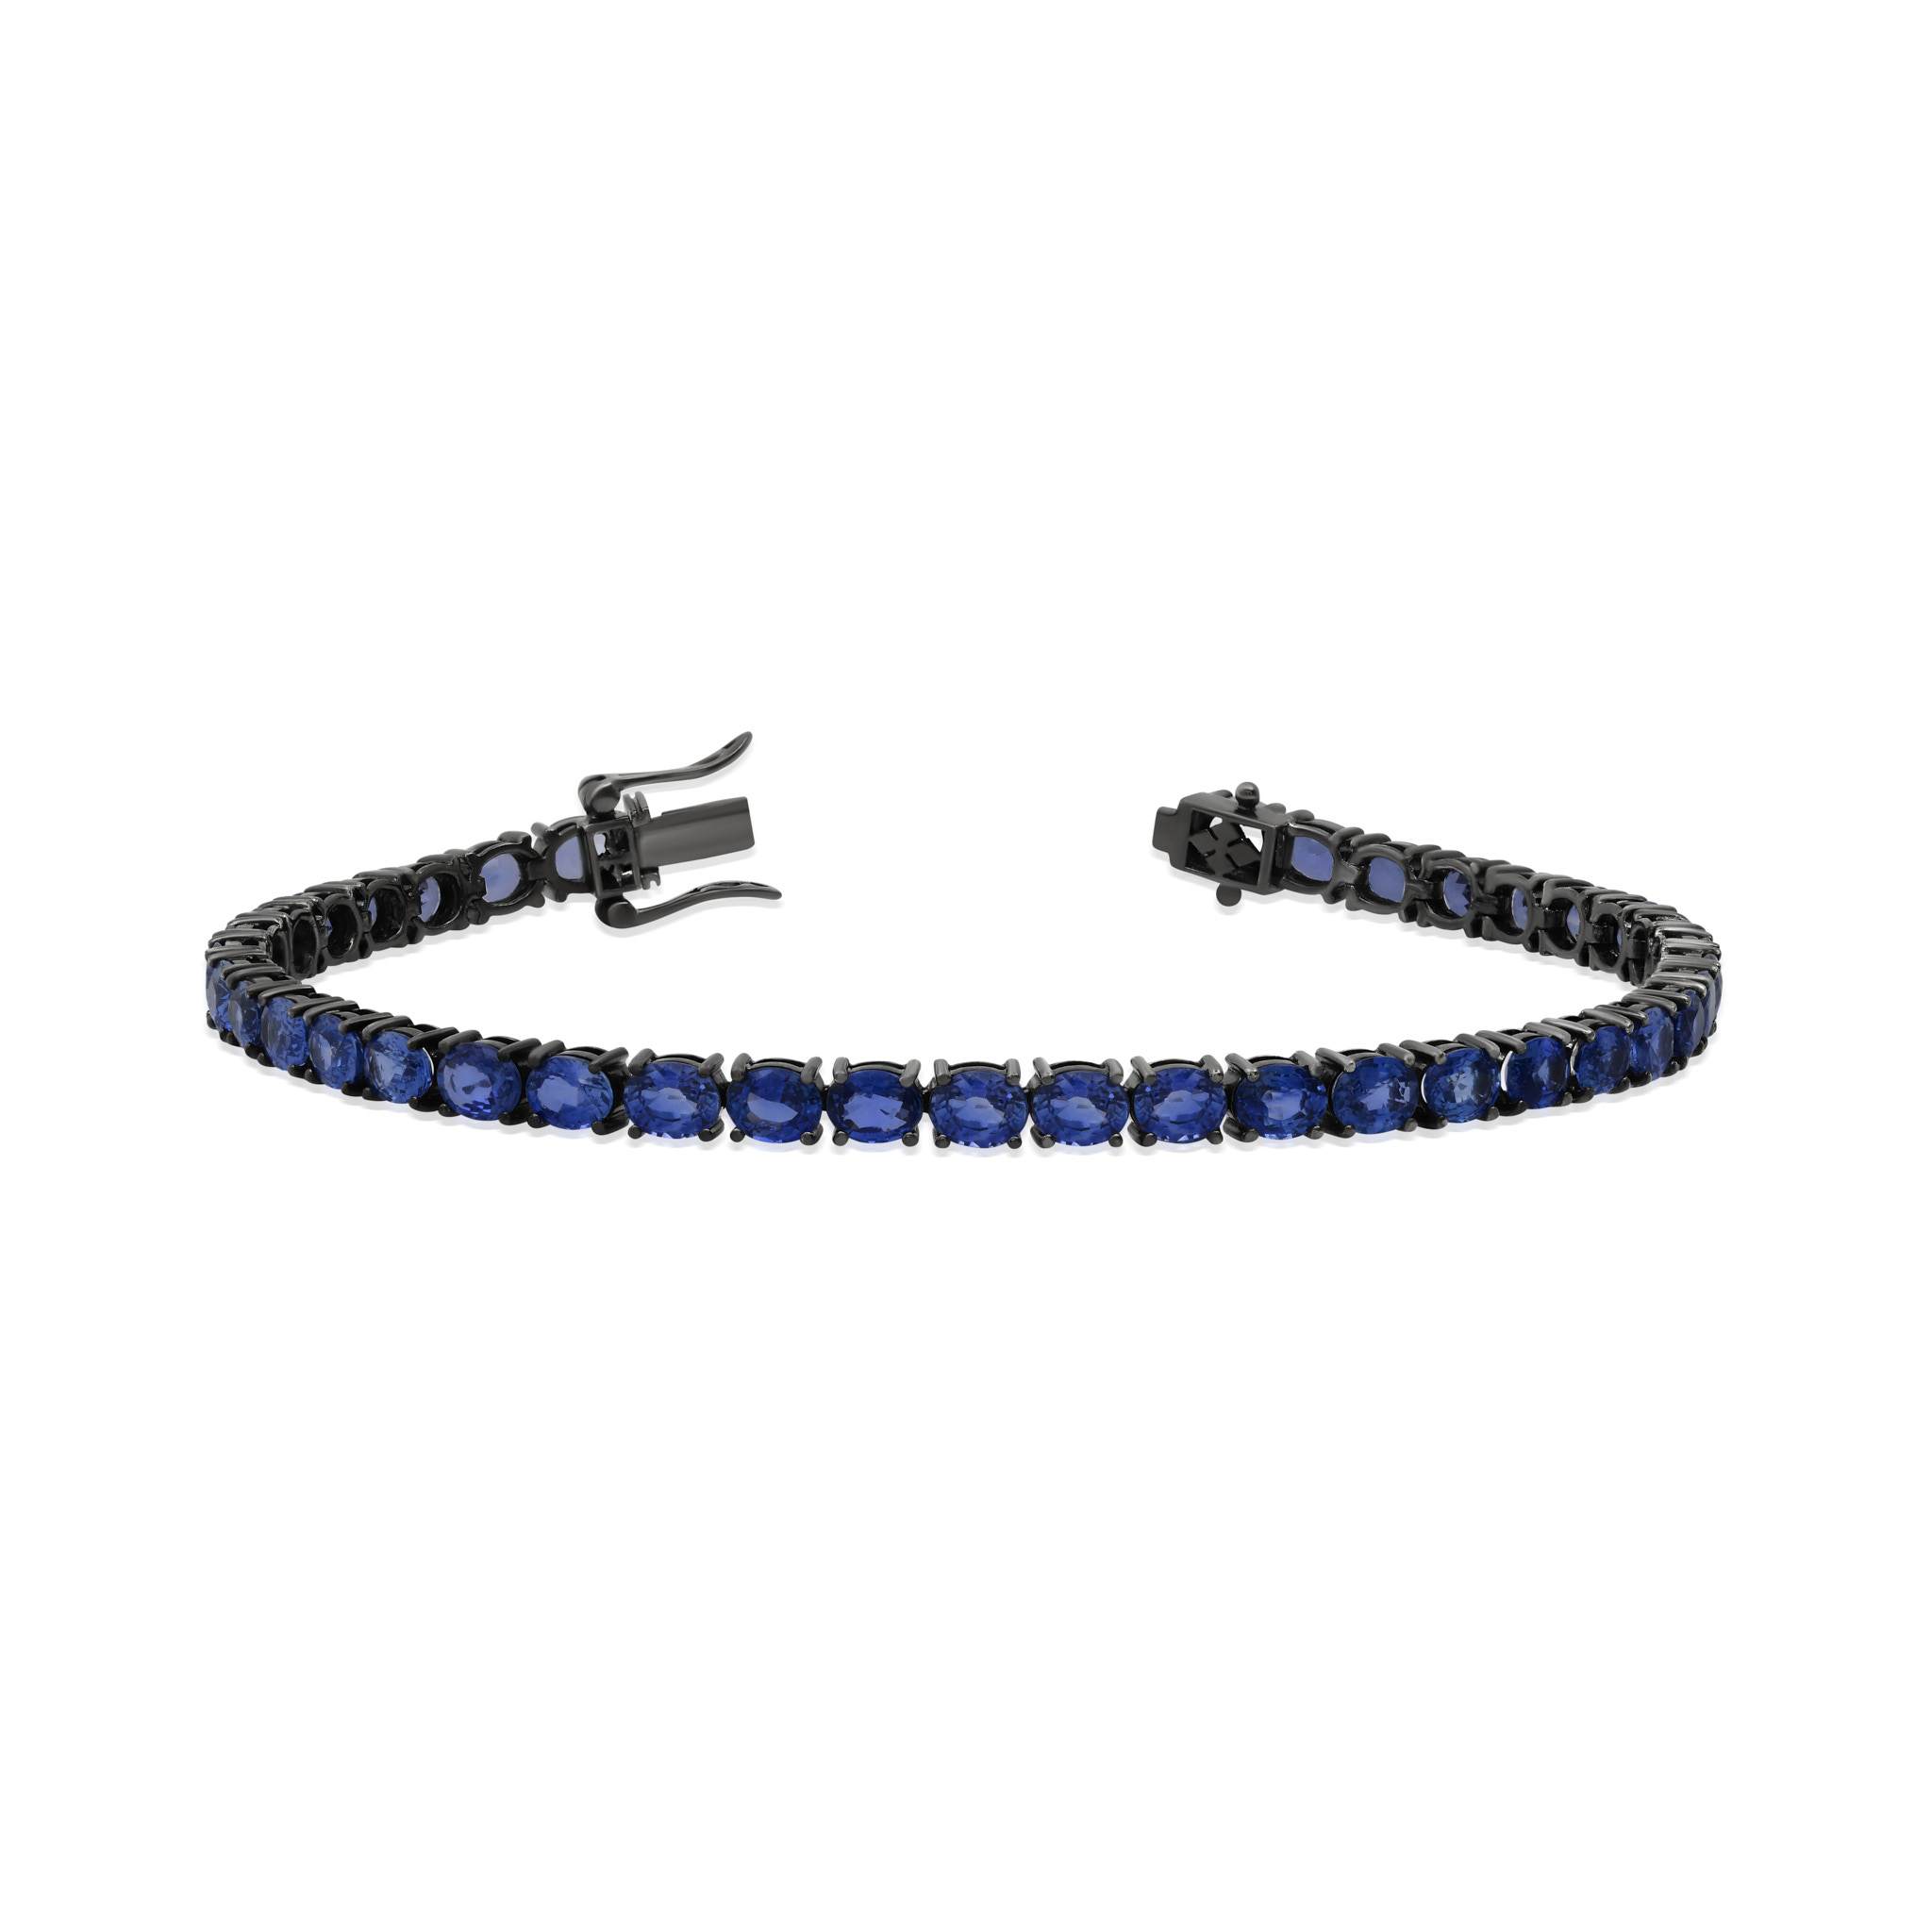 Buy Blue Sapphire Bracelet Mens Bracelet Mens Jewelry Mens Online in India   Etsy